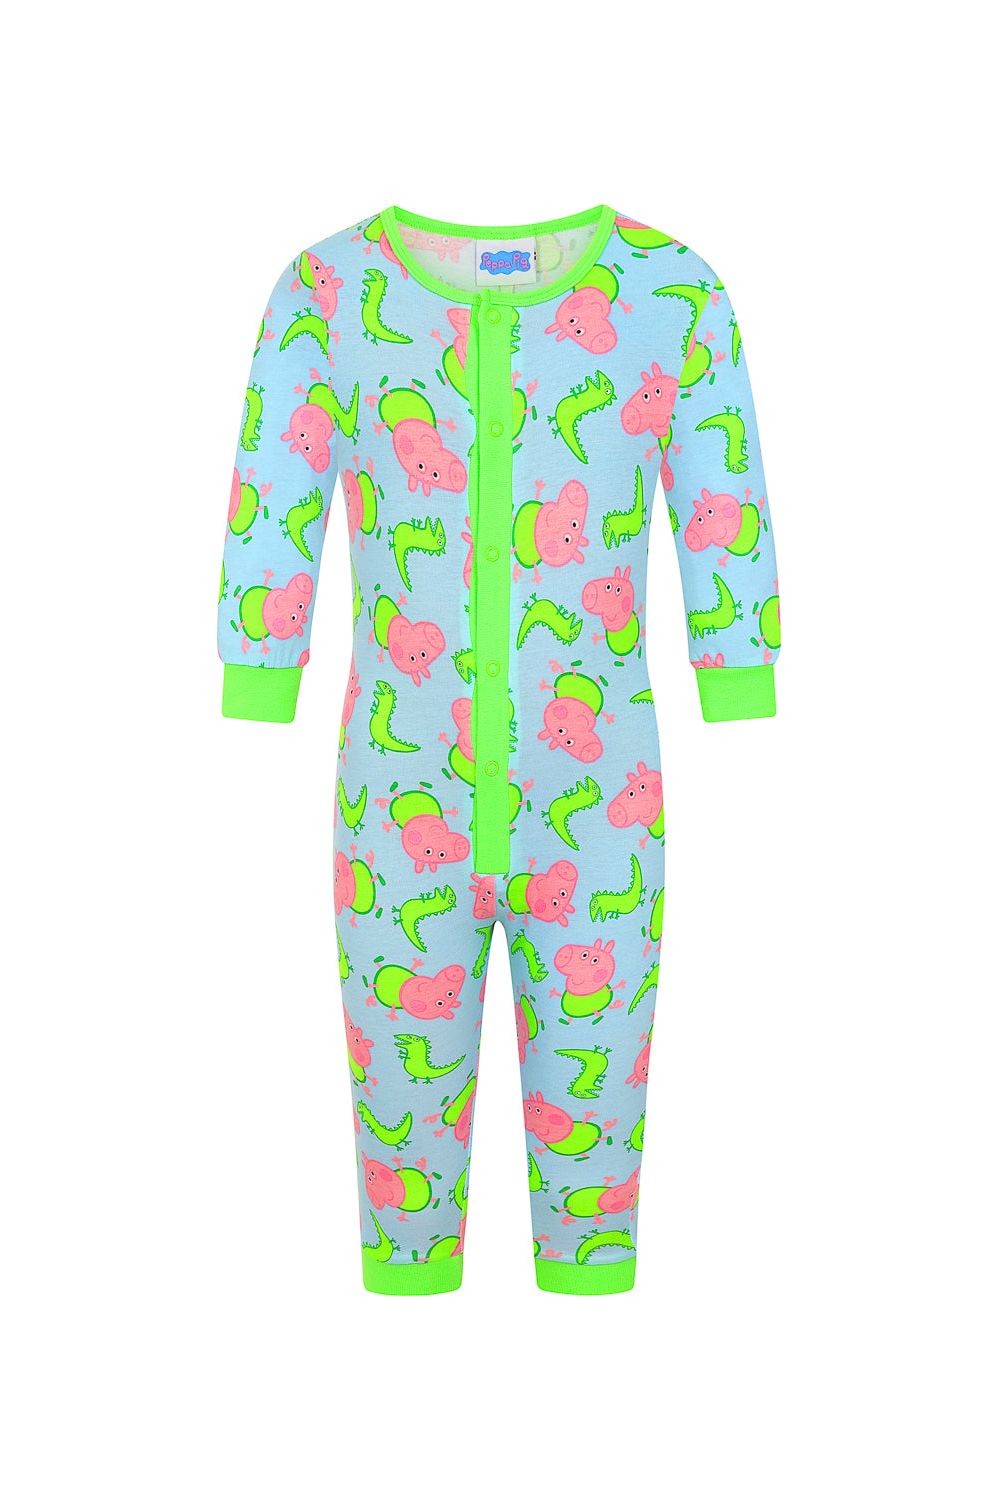 Boys George Pig Dinosaur  Blue and Green Onesie Sleepsuit - Pyjamas.com